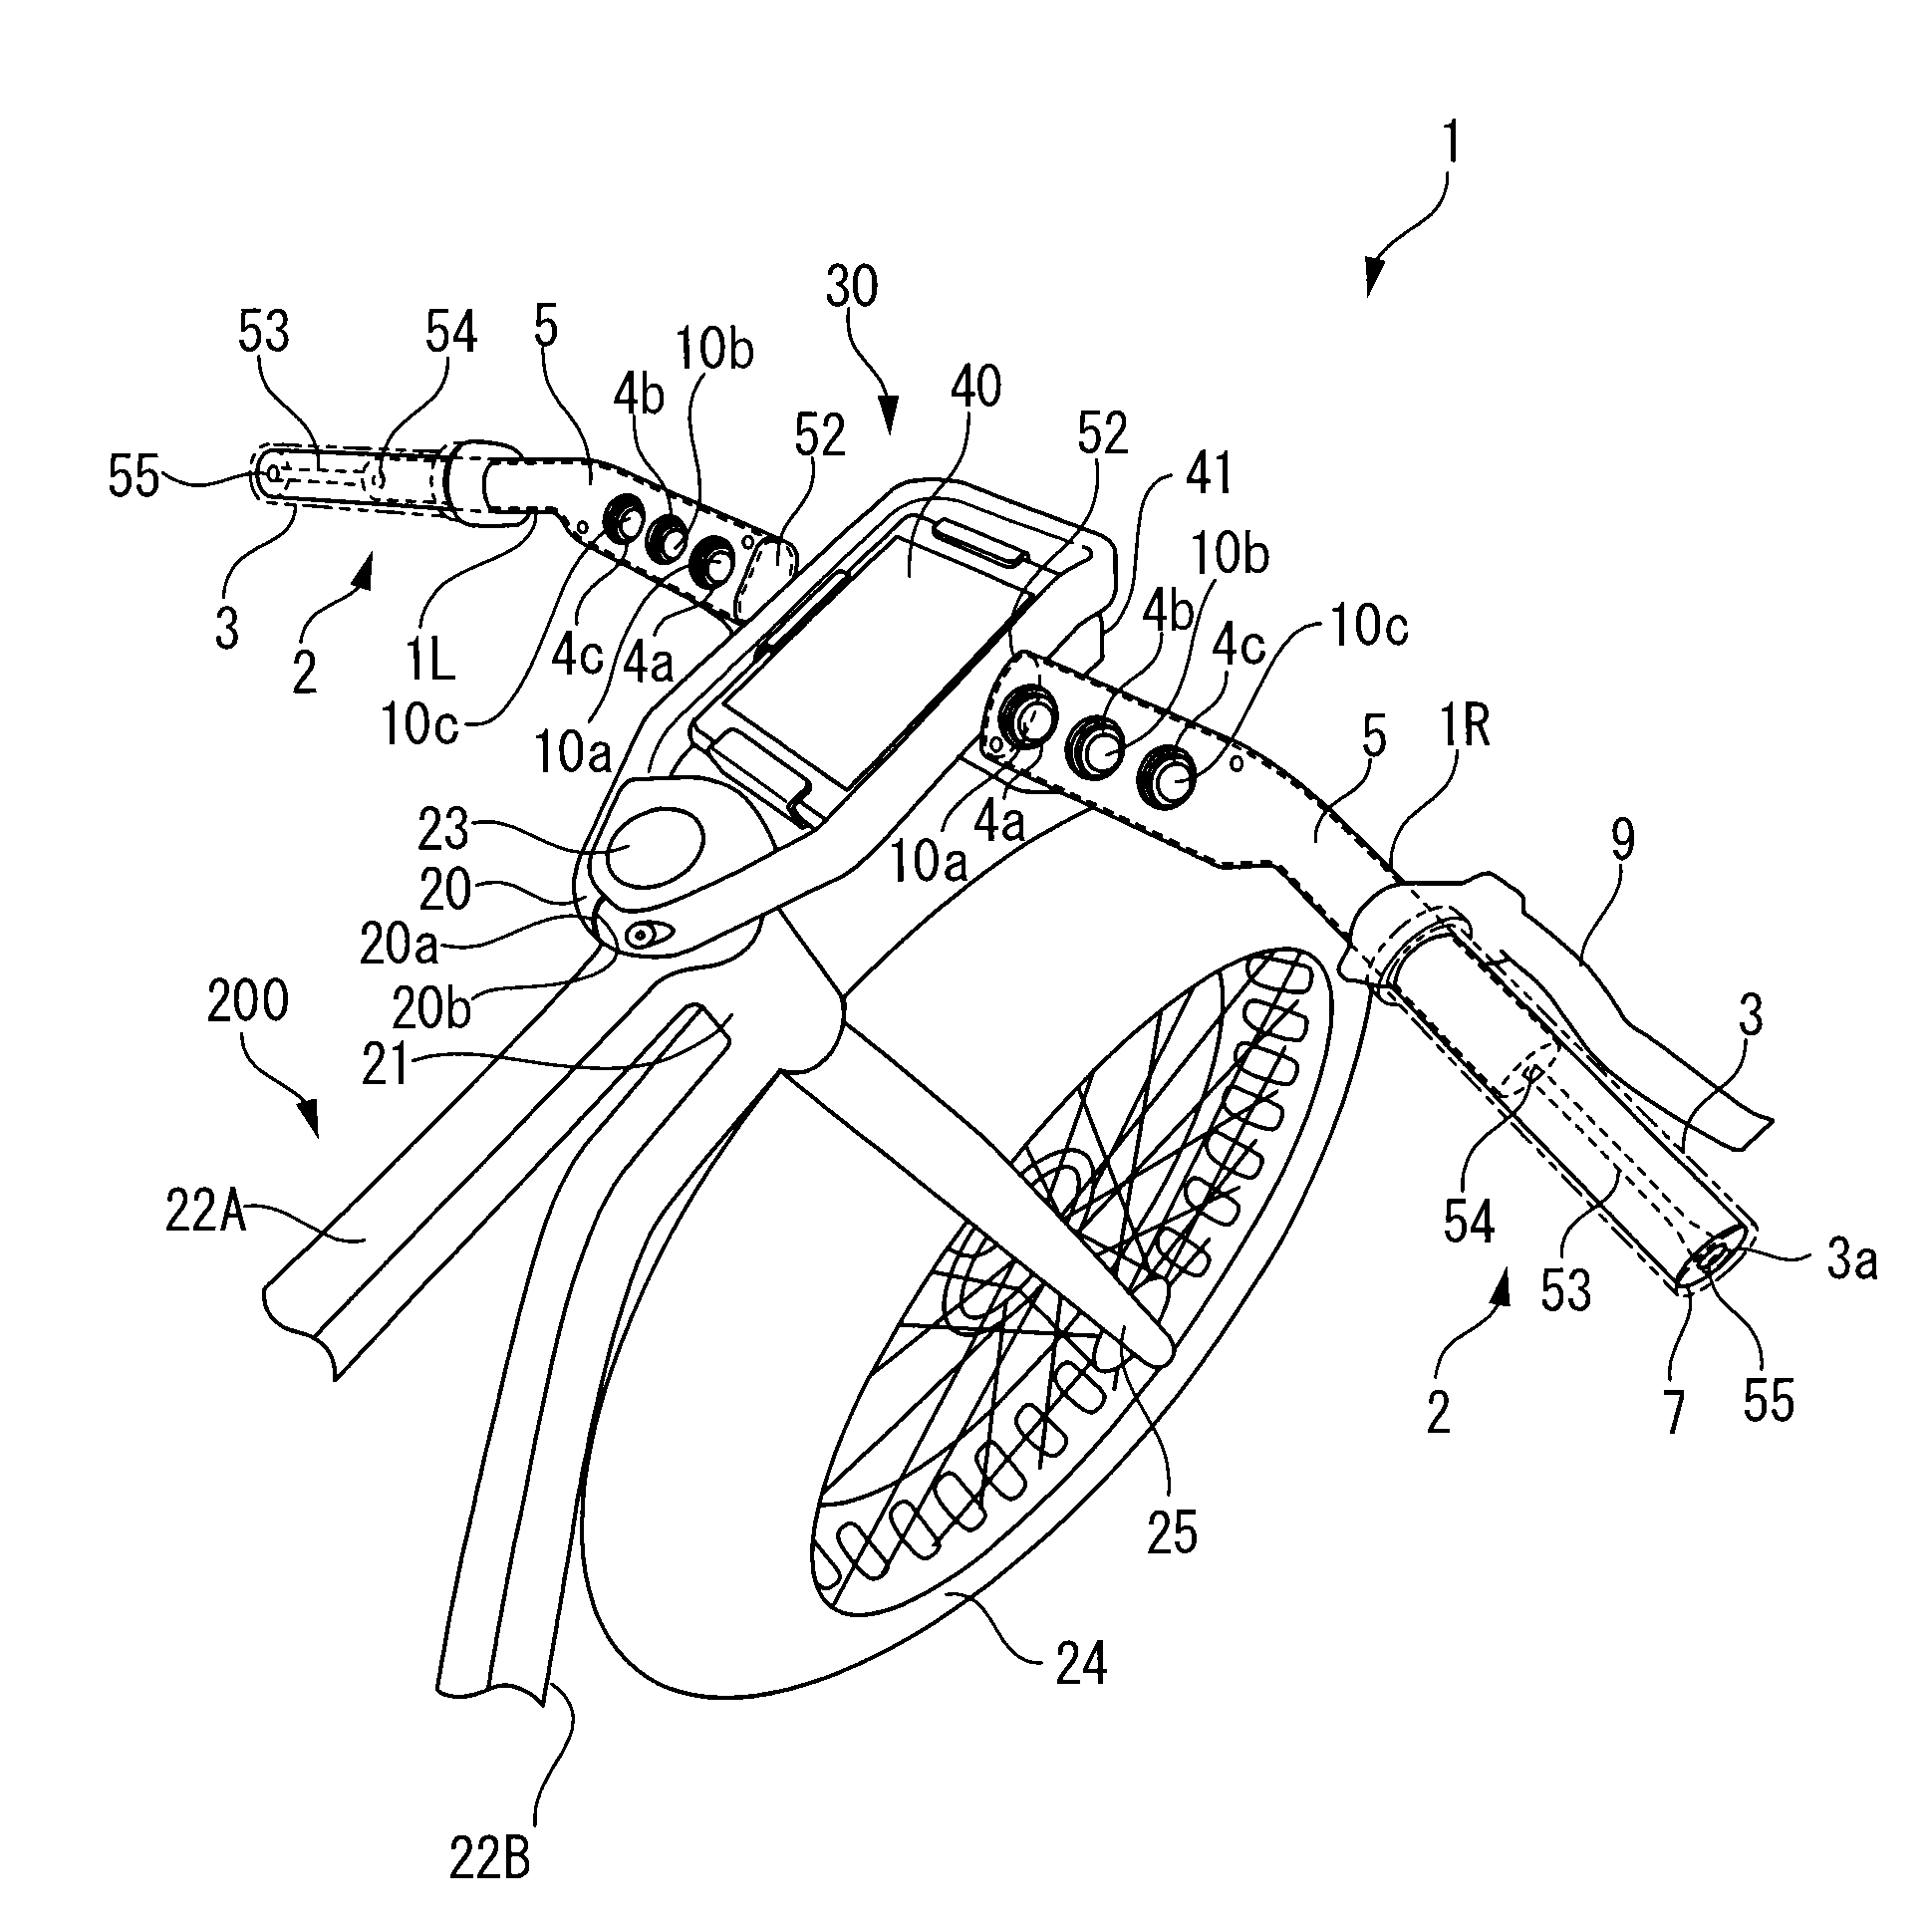 Tubular handlebar with integrated speakers